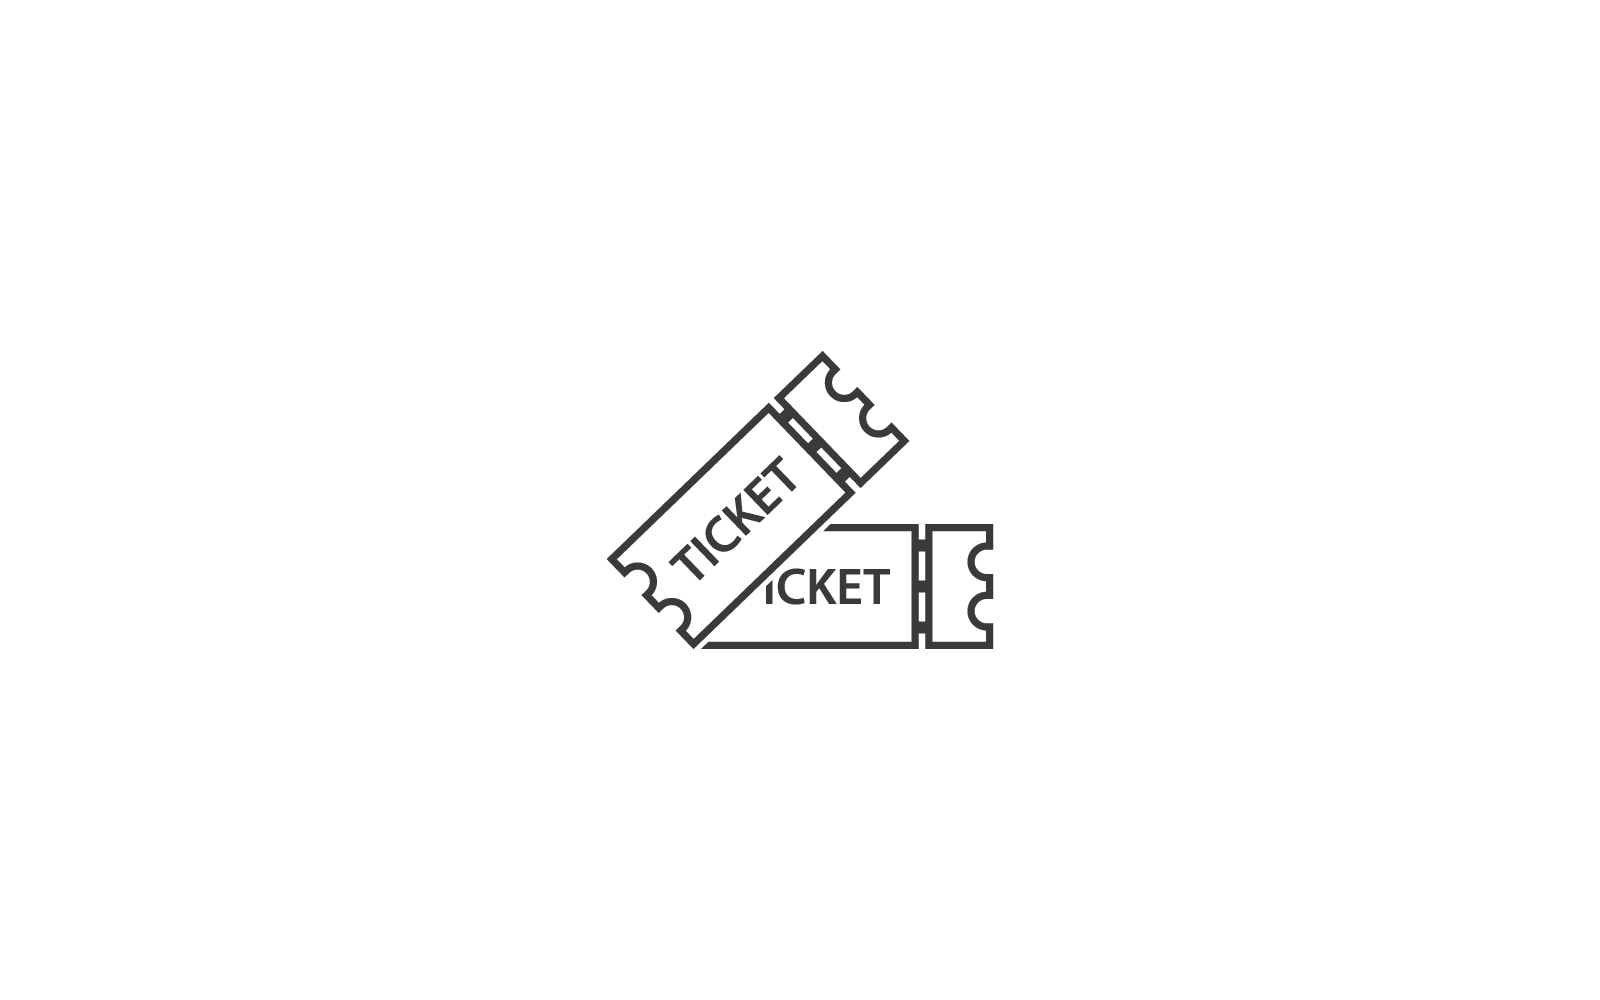 Ticket logo illustration icon vector flat design